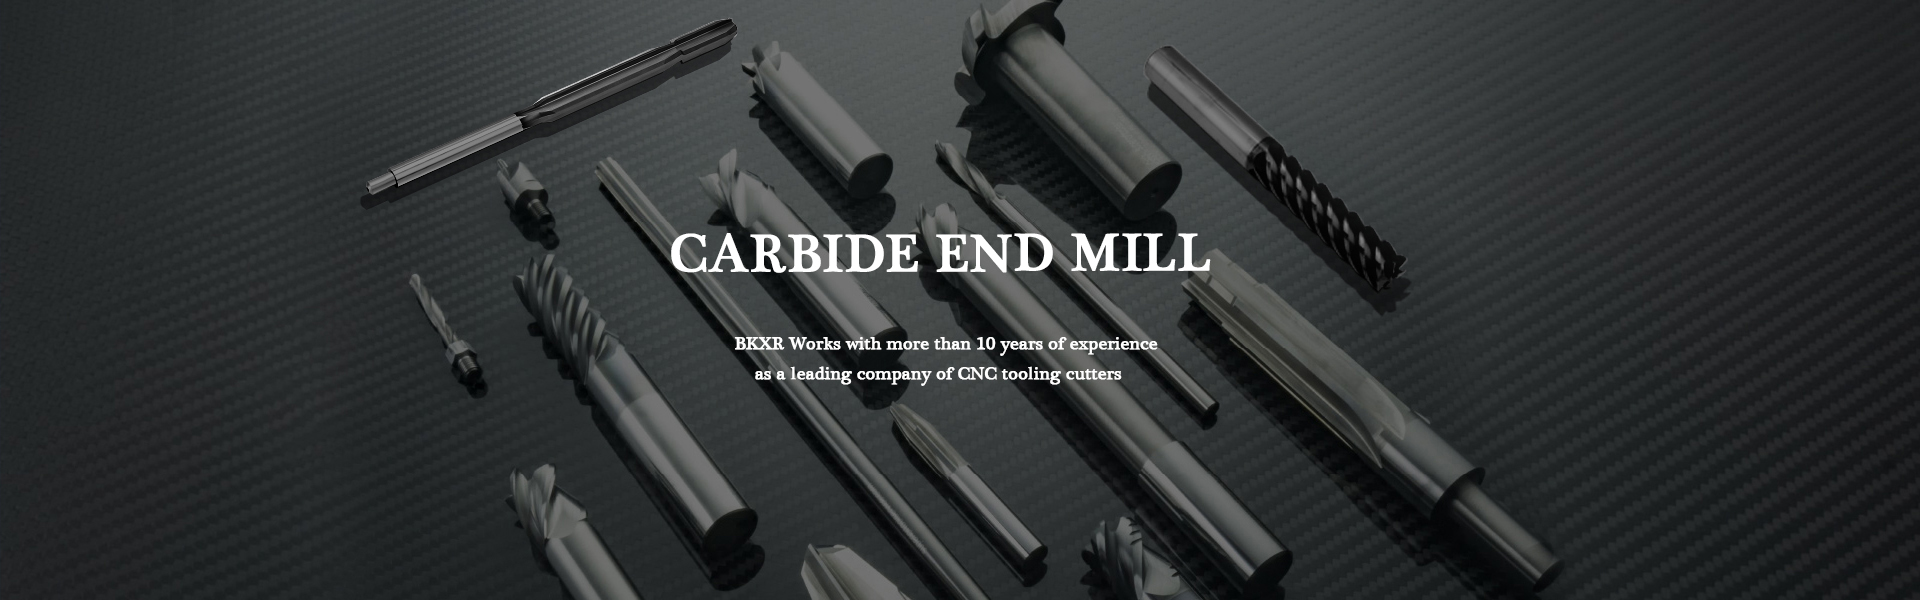 Carbide End Mill, карбидная вставка, резак с ЧПУ,Guangdong Berkshire Technology Ltd.